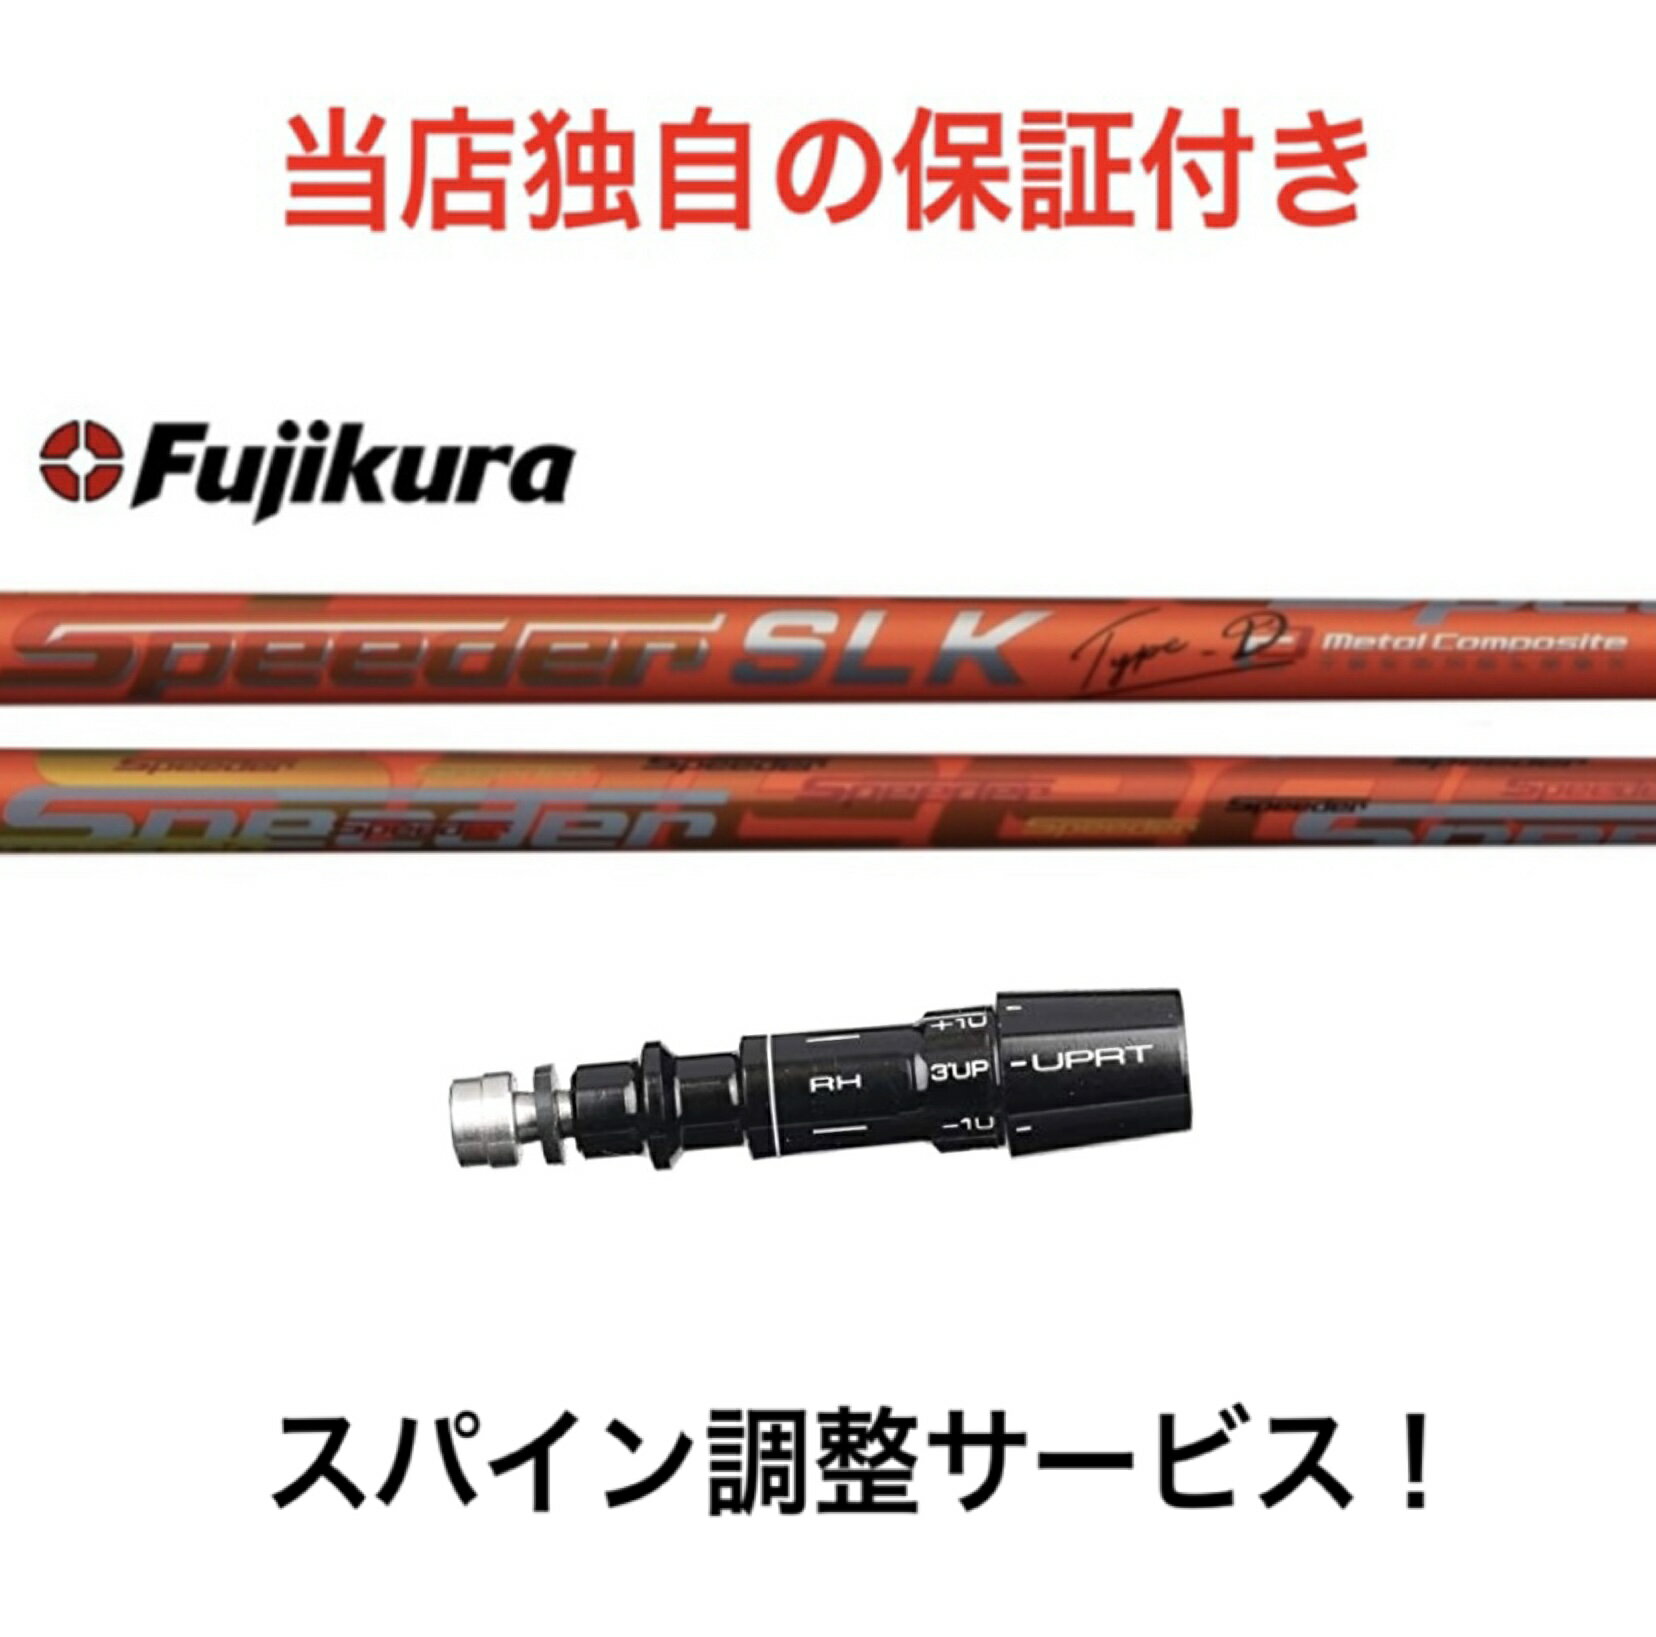 MZ 【スパイン調整無料】フジクラ スピーダー SLK タイプD Fujikura SPEEDER SLK Type D ミズノ Mizuno Pro ST200 MP JPXシリーズ対応 シャフト スリーブ付 ドライバー用 ゴルフ 日本仕様 1